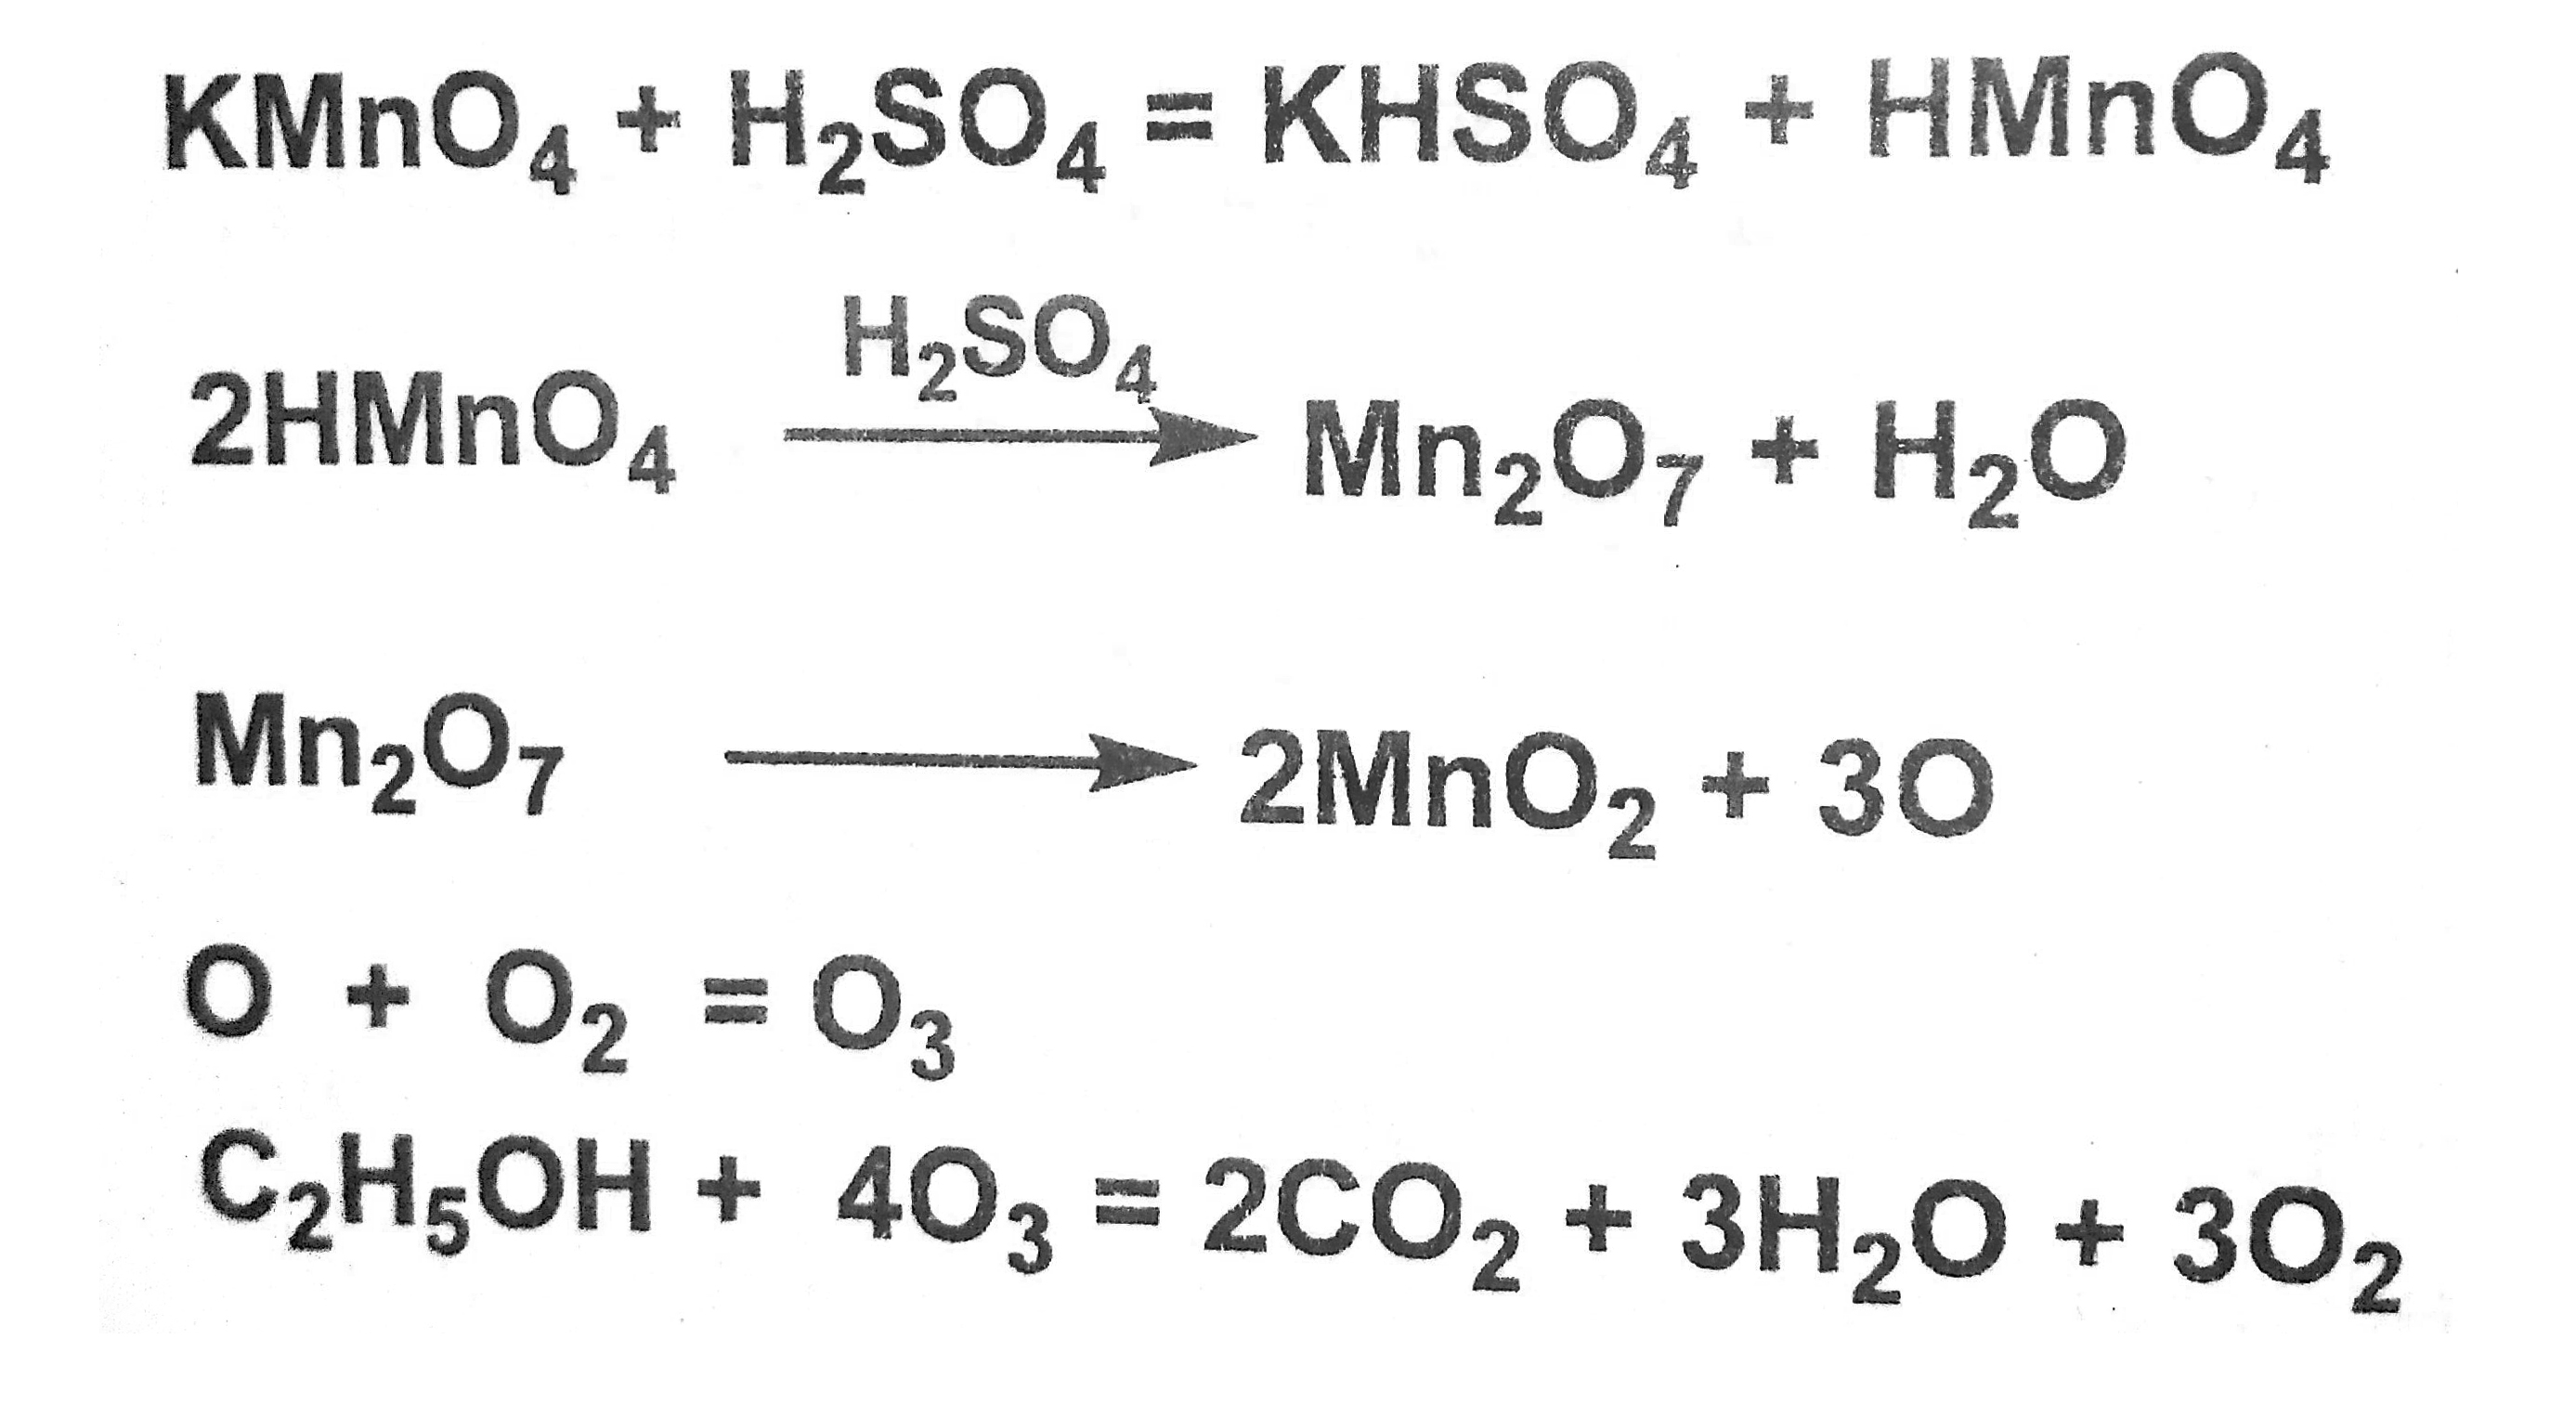 Kmno4 k2so3 koh. Kmno4 уравнение. Уравнения диссоциации кислот hmno4. Уравнение диссоциации hmno4. Kmno4.